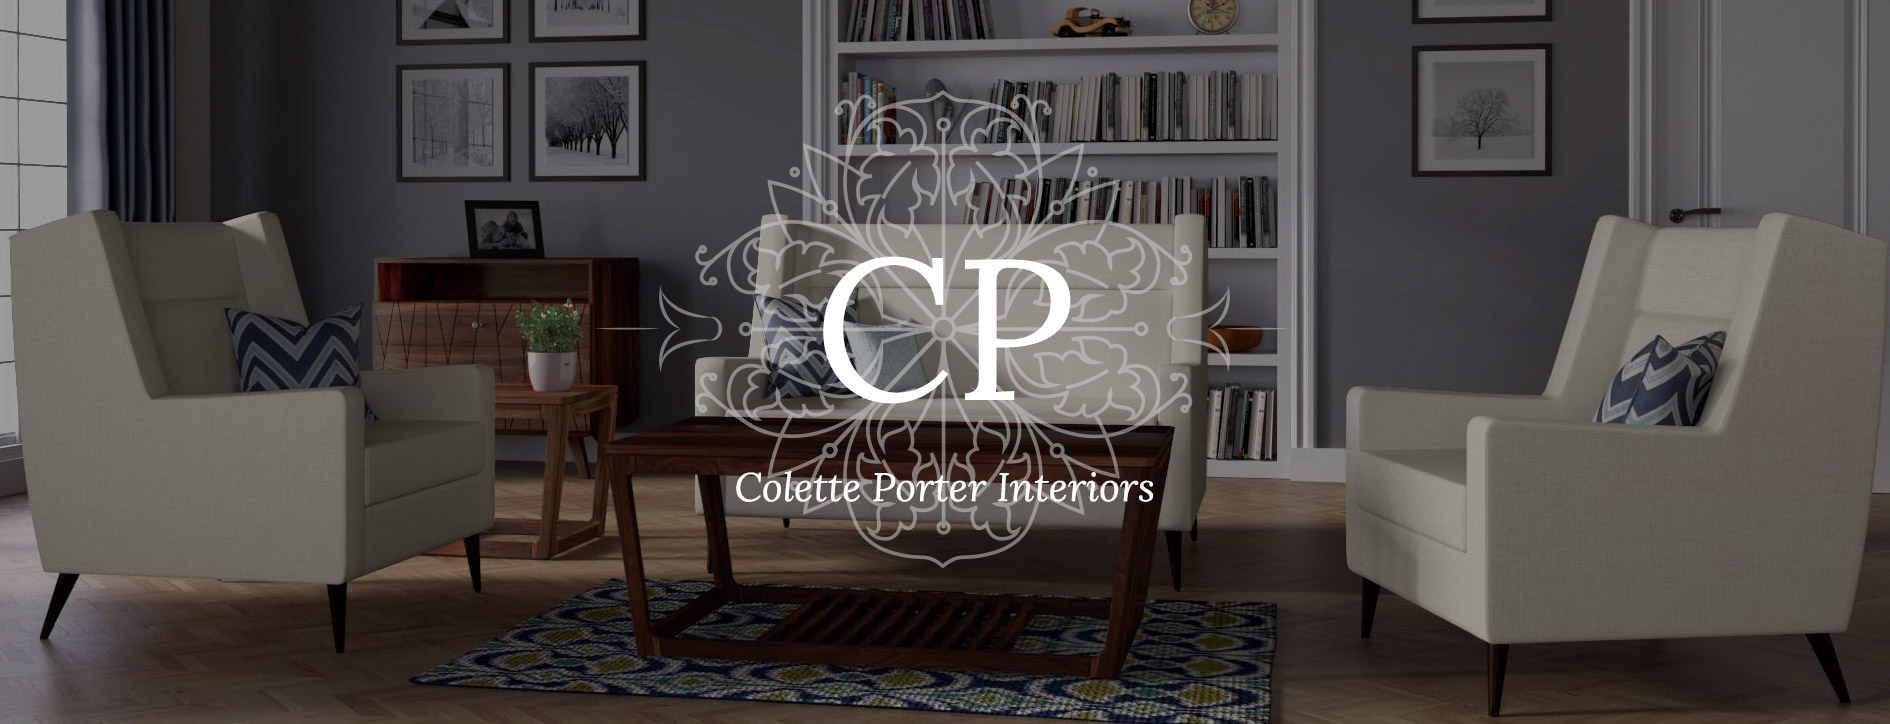 Colette Porter Interiors Header